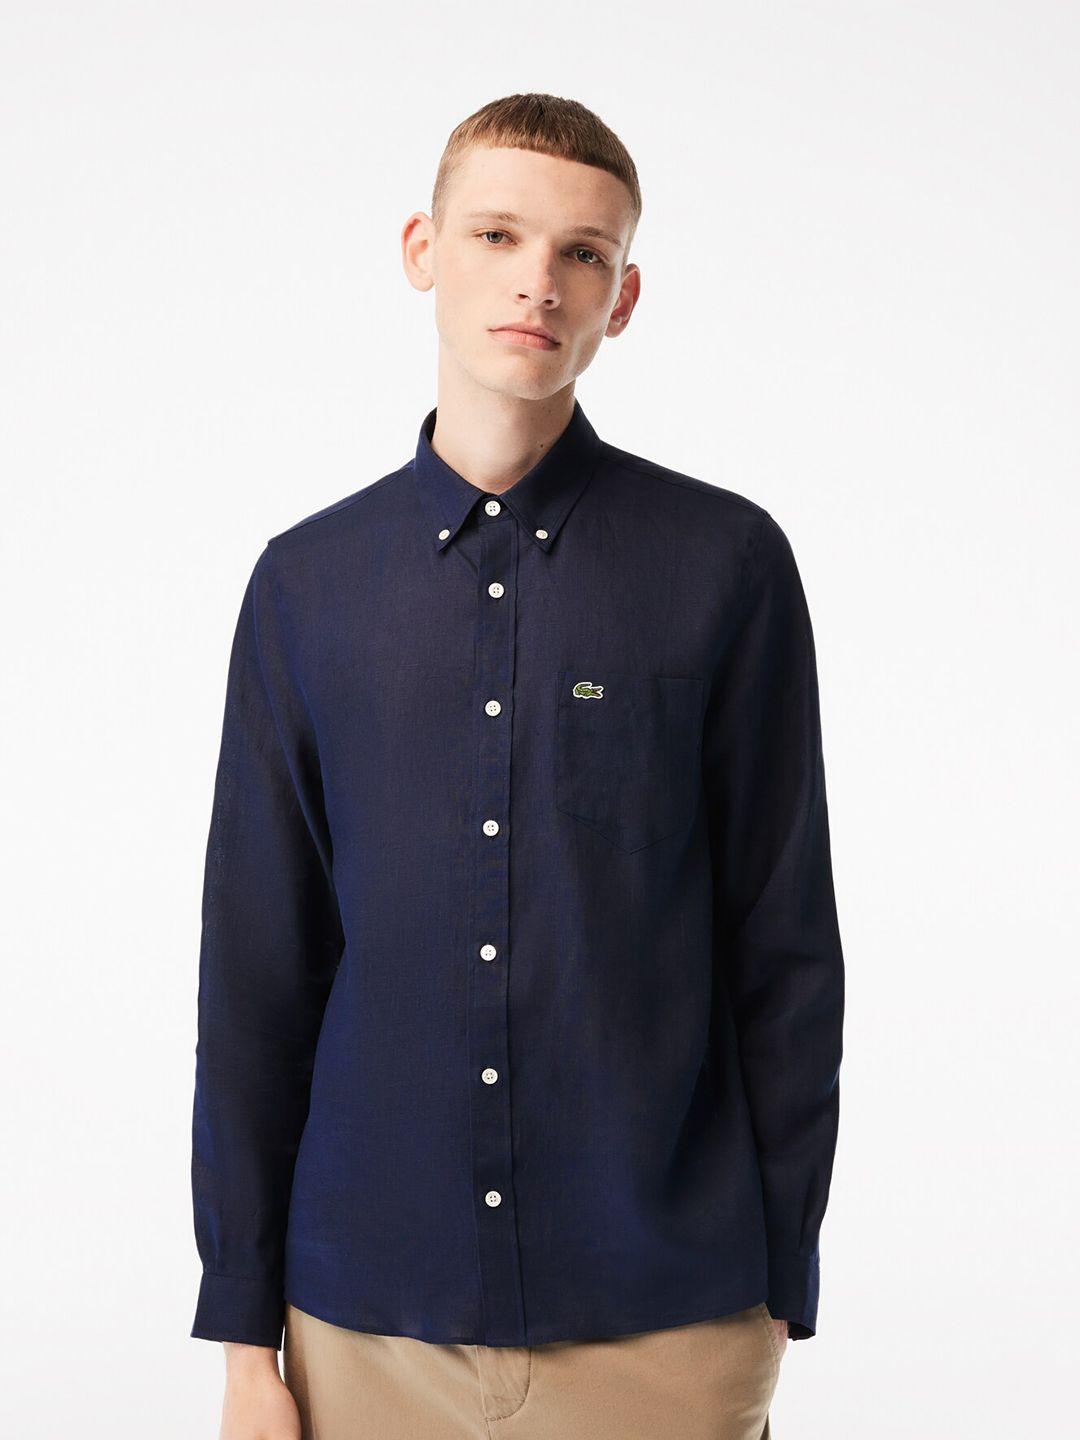 lacoste-men-spread-collar-long-sleeves-modern-casual-shirt